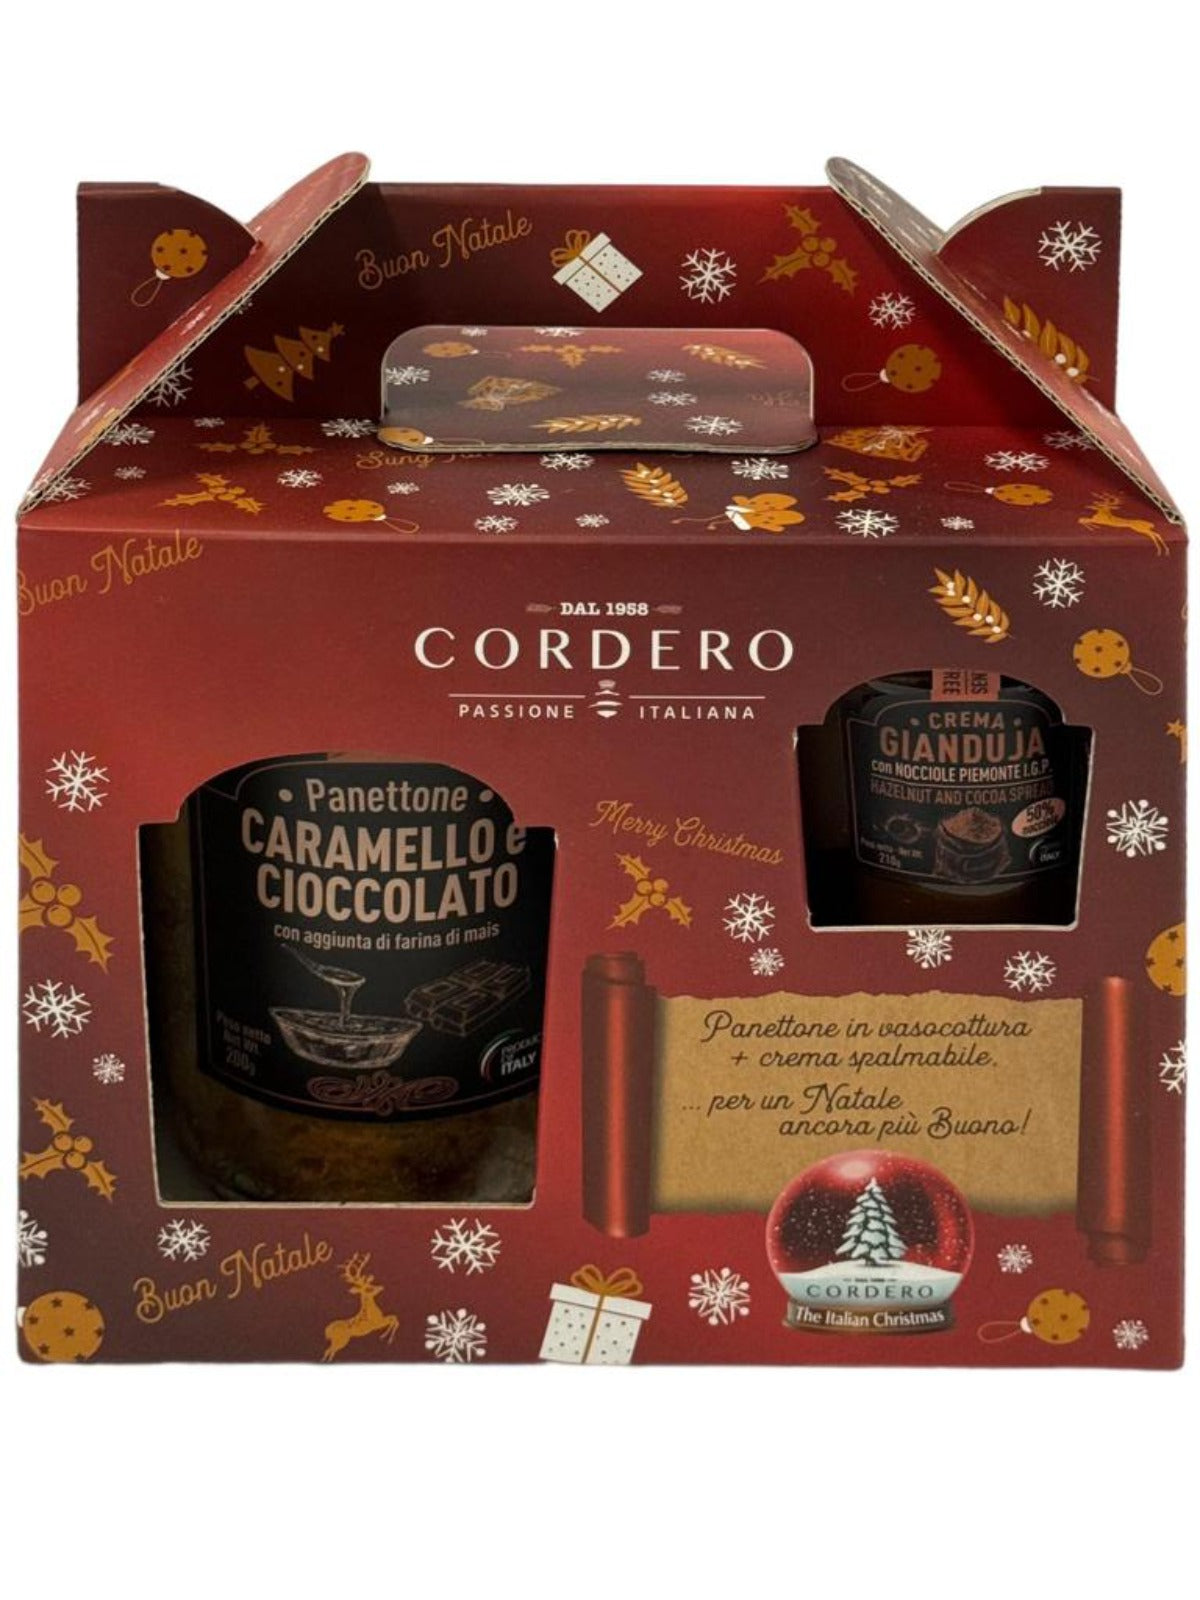 Cordero Panettone Italian Caramel and Chocolate Cake (200g) with Chocolate & Hazelnut Spread Sauce (210g)